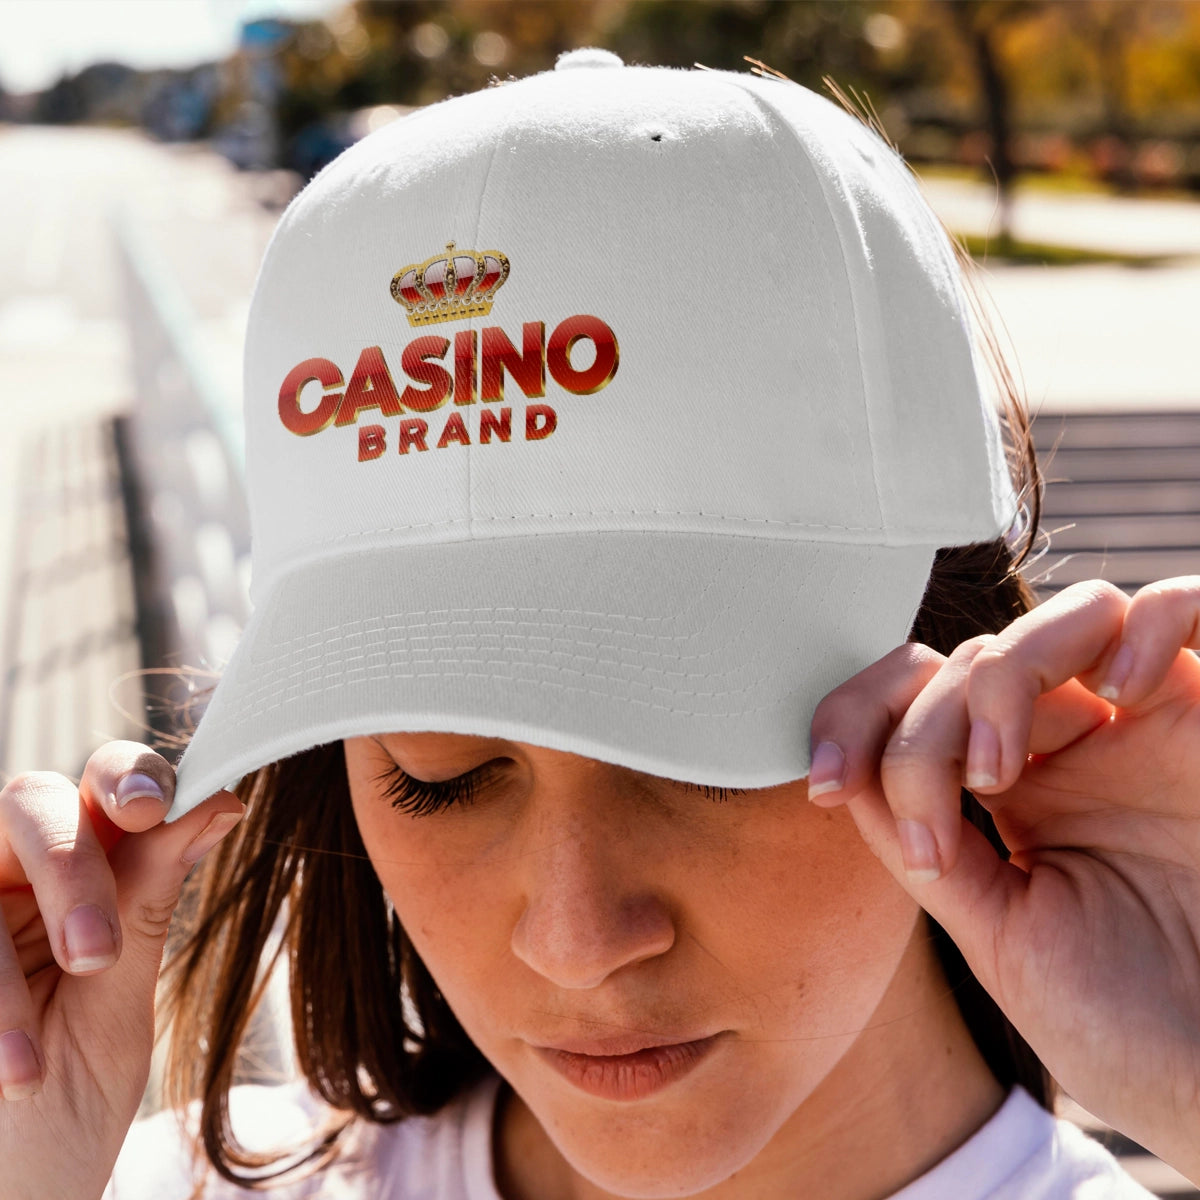 Casinobrand.com